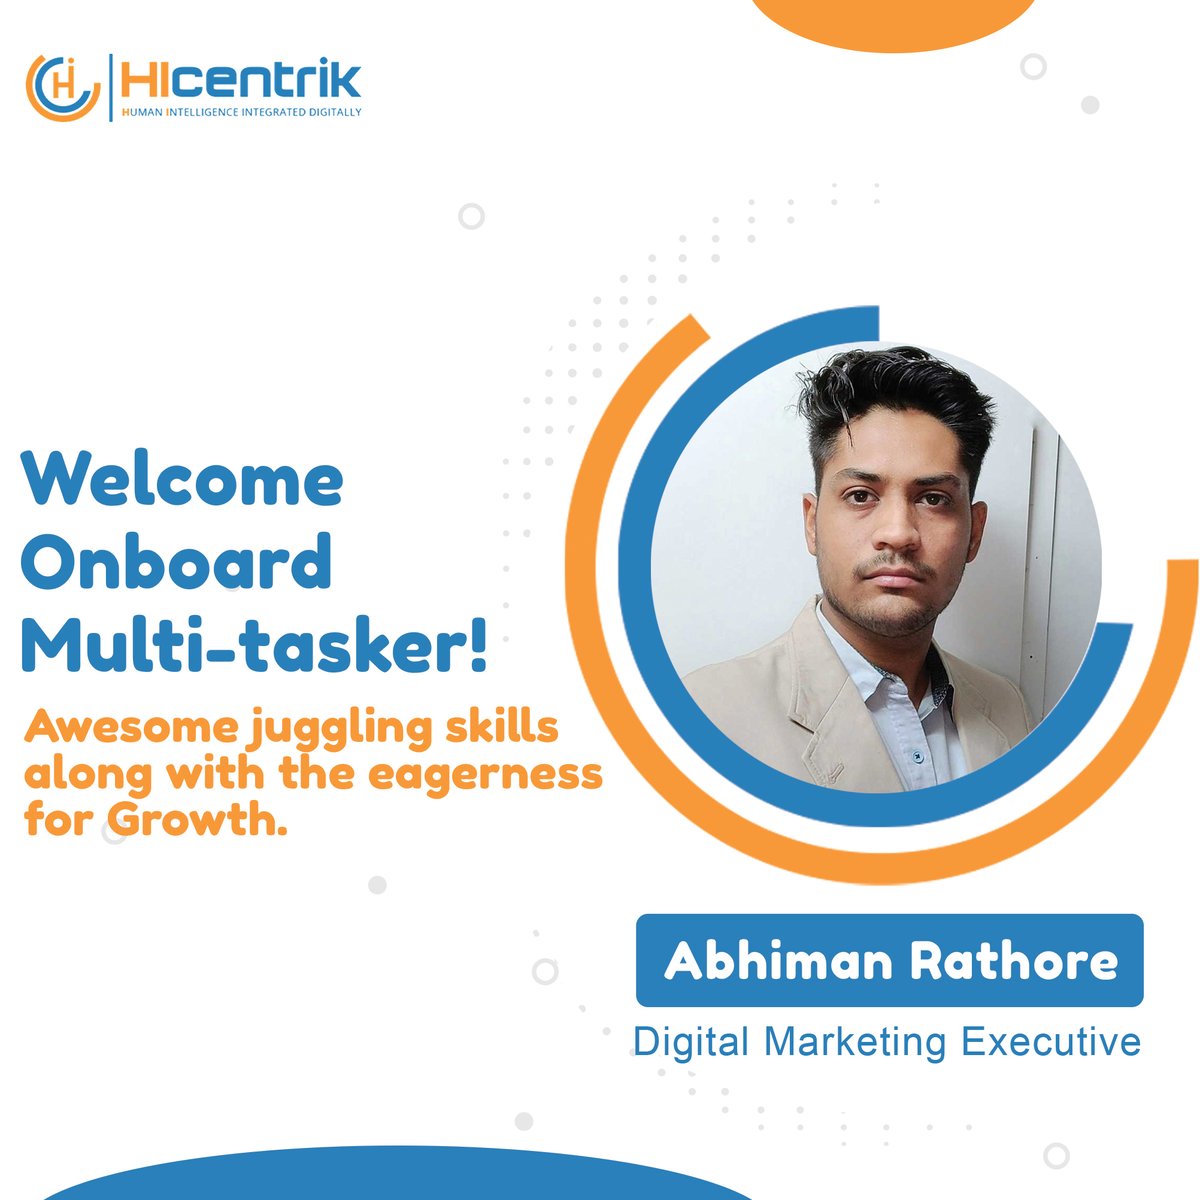 Team #HIcentrik Welcomes Abhiman Rathore

#GrowthMarketing #digitalmarketingexecutive #executive #multitasker #marketer #marketing #familygrow #digitalmarketingagency #newentry #teammates #creative #welcome